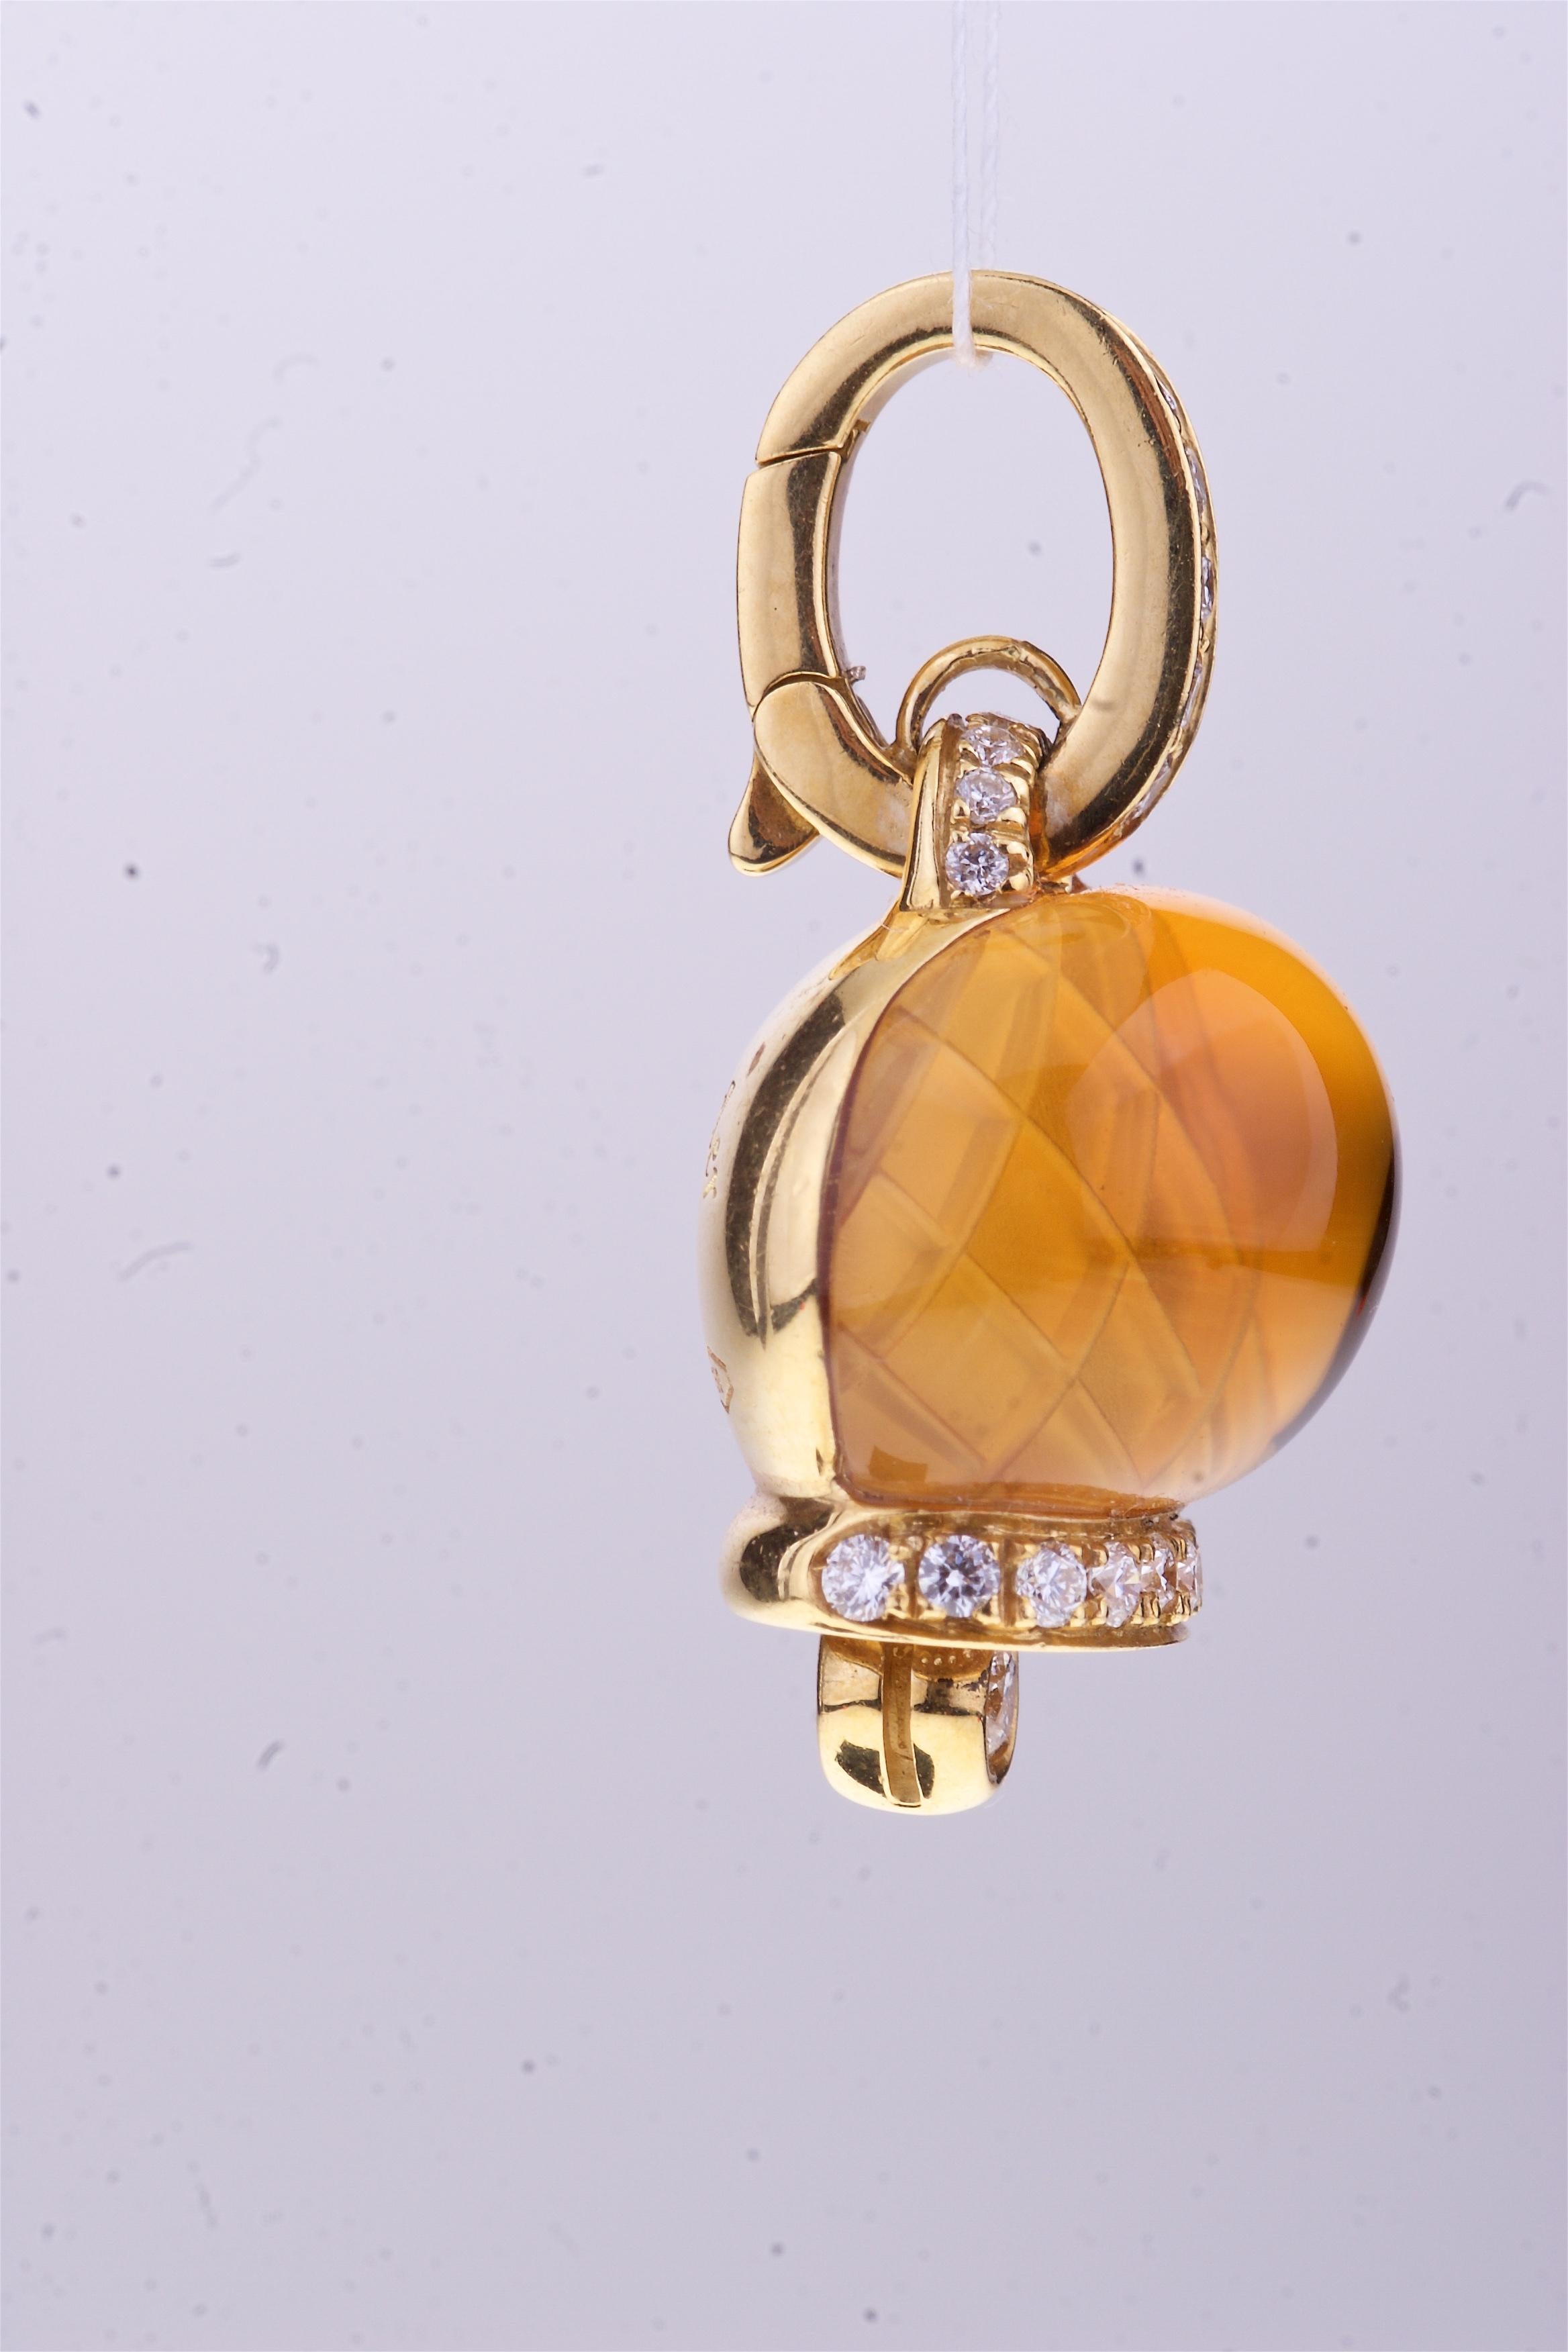 Brilliant Cut Chantecler Campanella 18kt Gold Pendant with Citrine Quartz and Diamonds, Unique